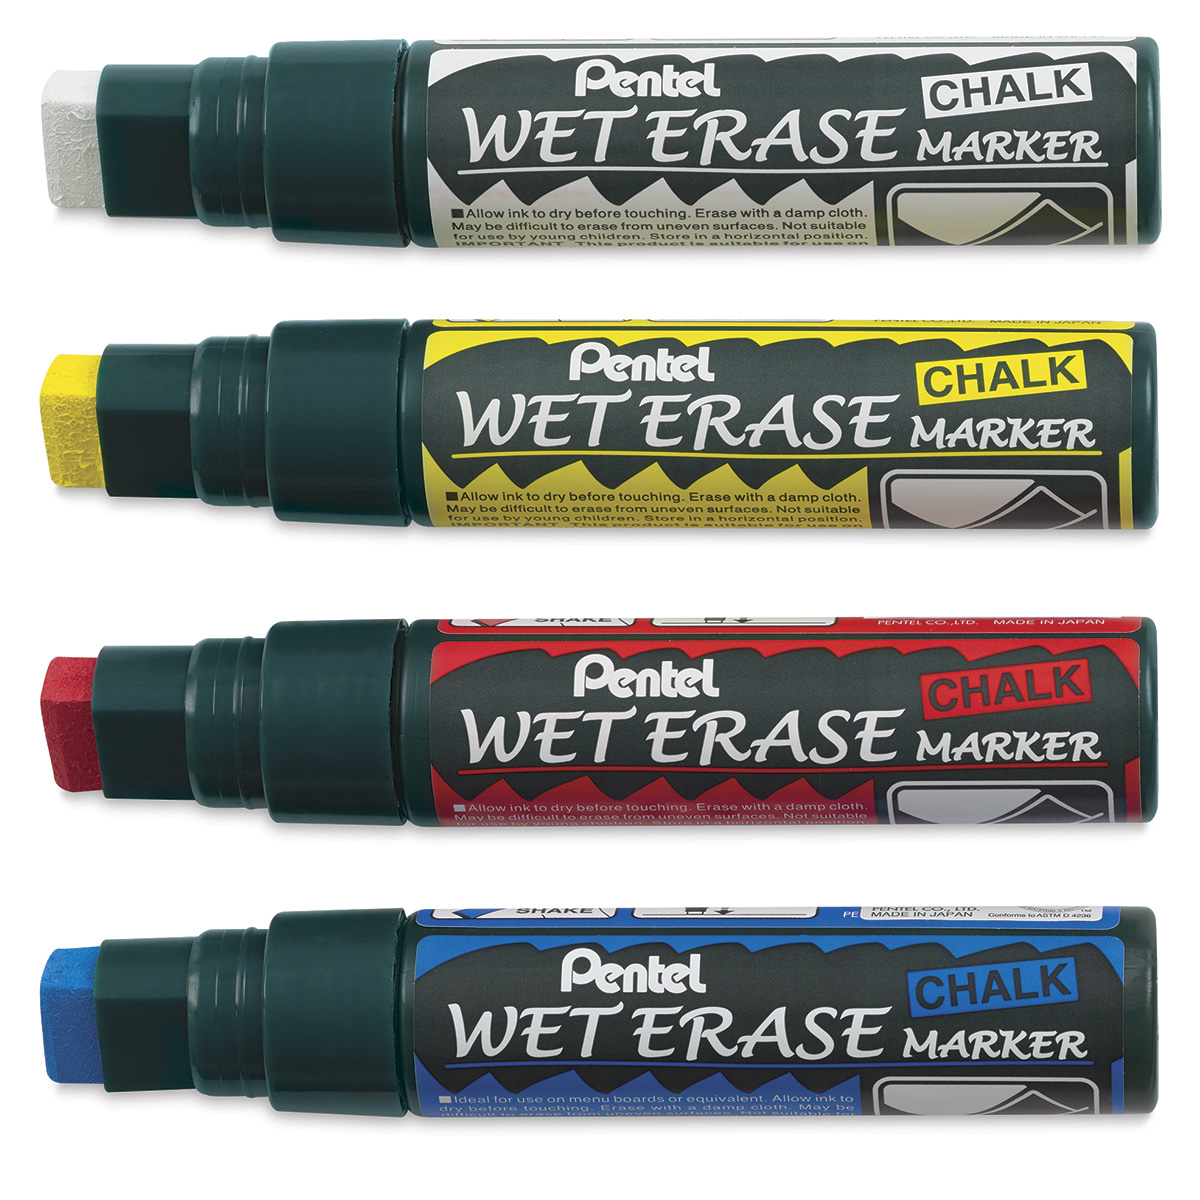 Pentel Wet Erase Chalk Markers